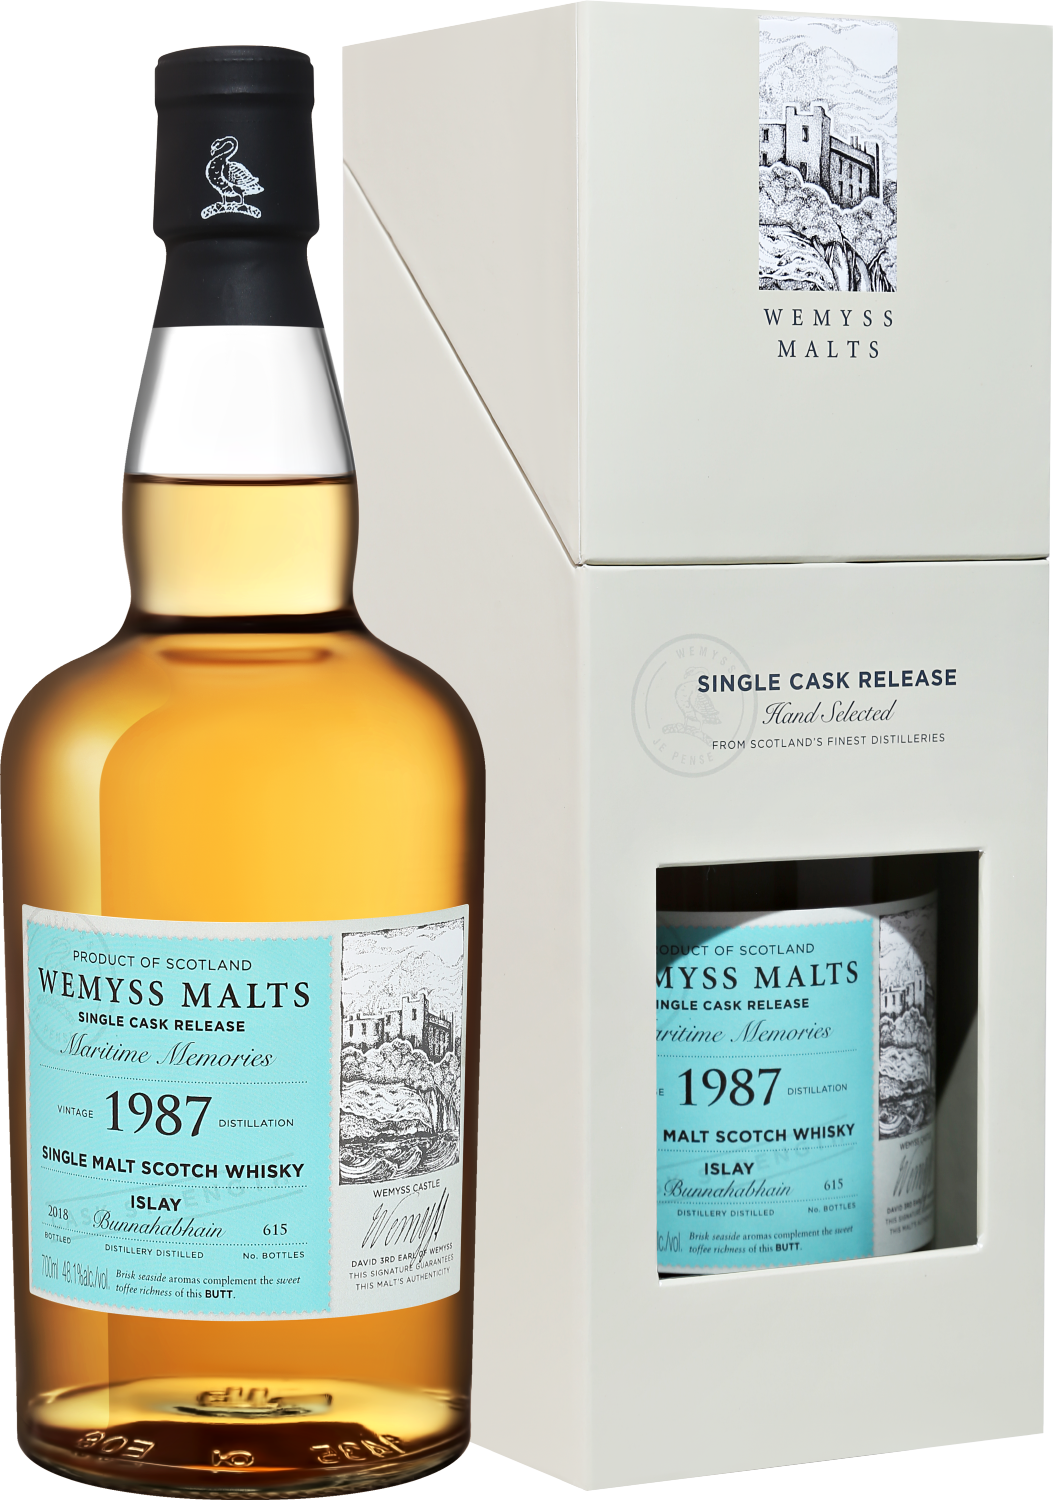 Wemyss Malts Maritime Memories Bunnahabhain 1987 Islay Single Cask Single Malt Scotch Whisky (gift box) bunnahabhain aonadh islay single malt scotch whisky